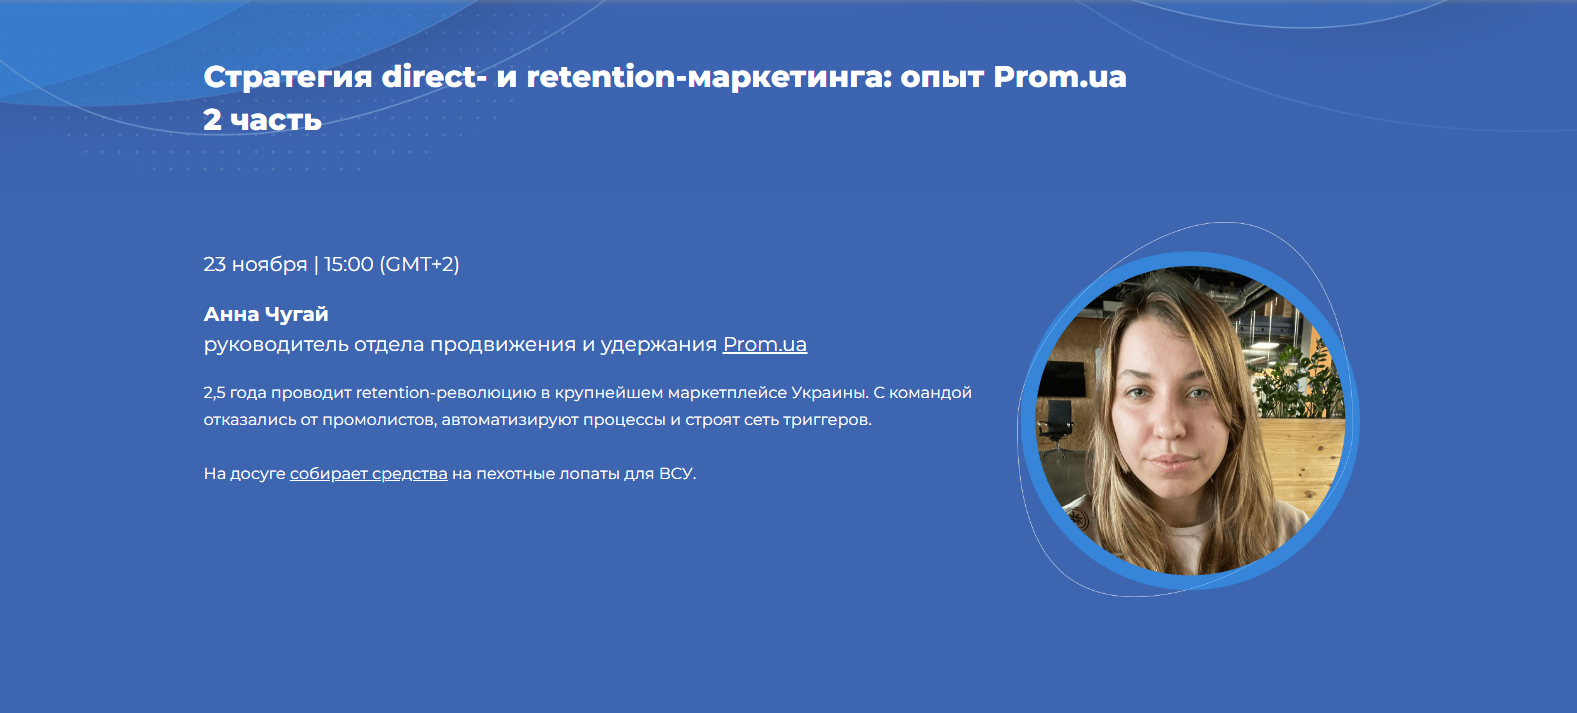 Стратегия direct- и retention-маркетинга: опыт Prom.ua